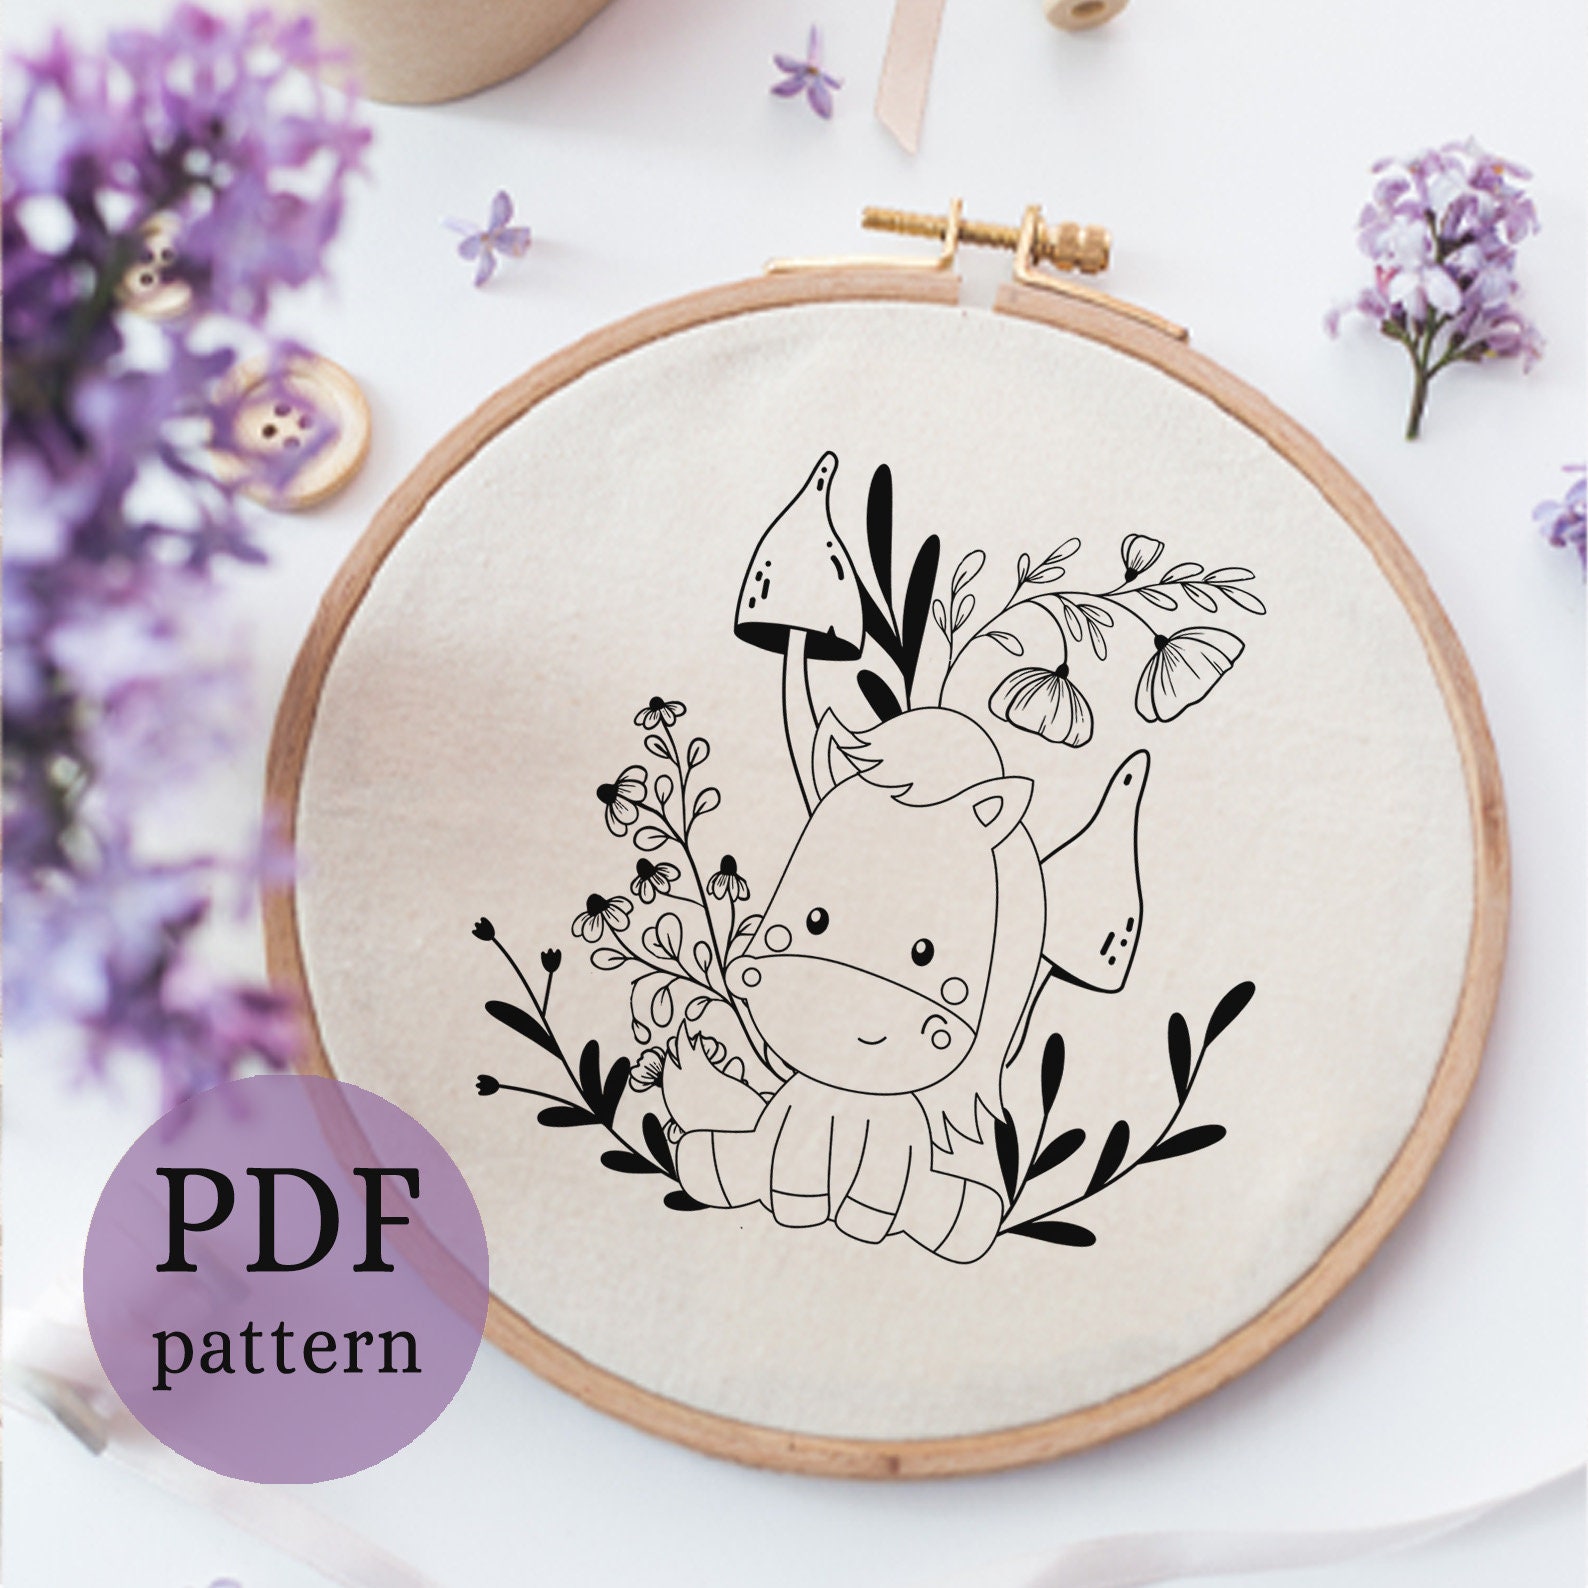 Stitching pony pattern PDF - by LeatherHubPatterns